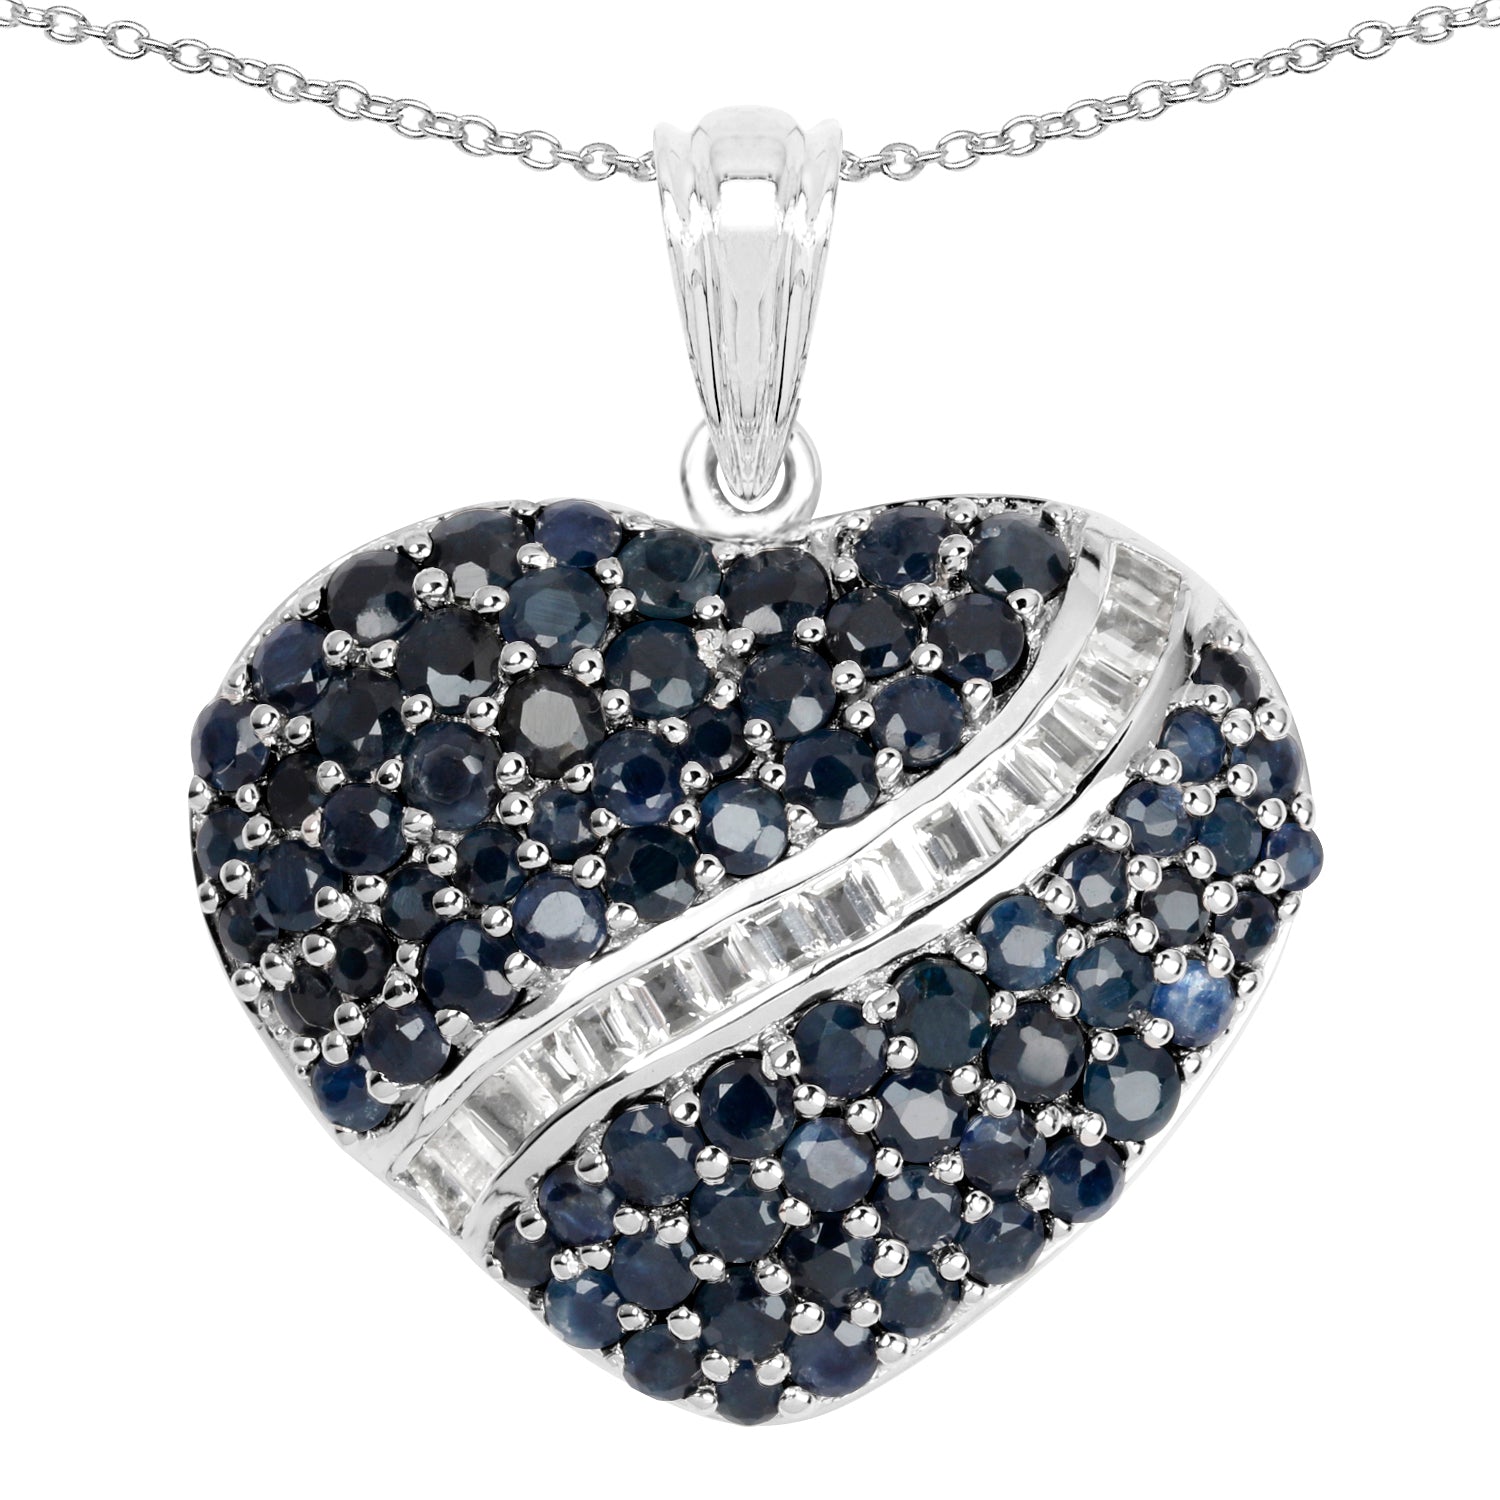 Blue Sapphire and White Topaz Cluster Pendant in Sterling Silver - 4.67 ctw, September Birthstone Gift for Women Bijou Her